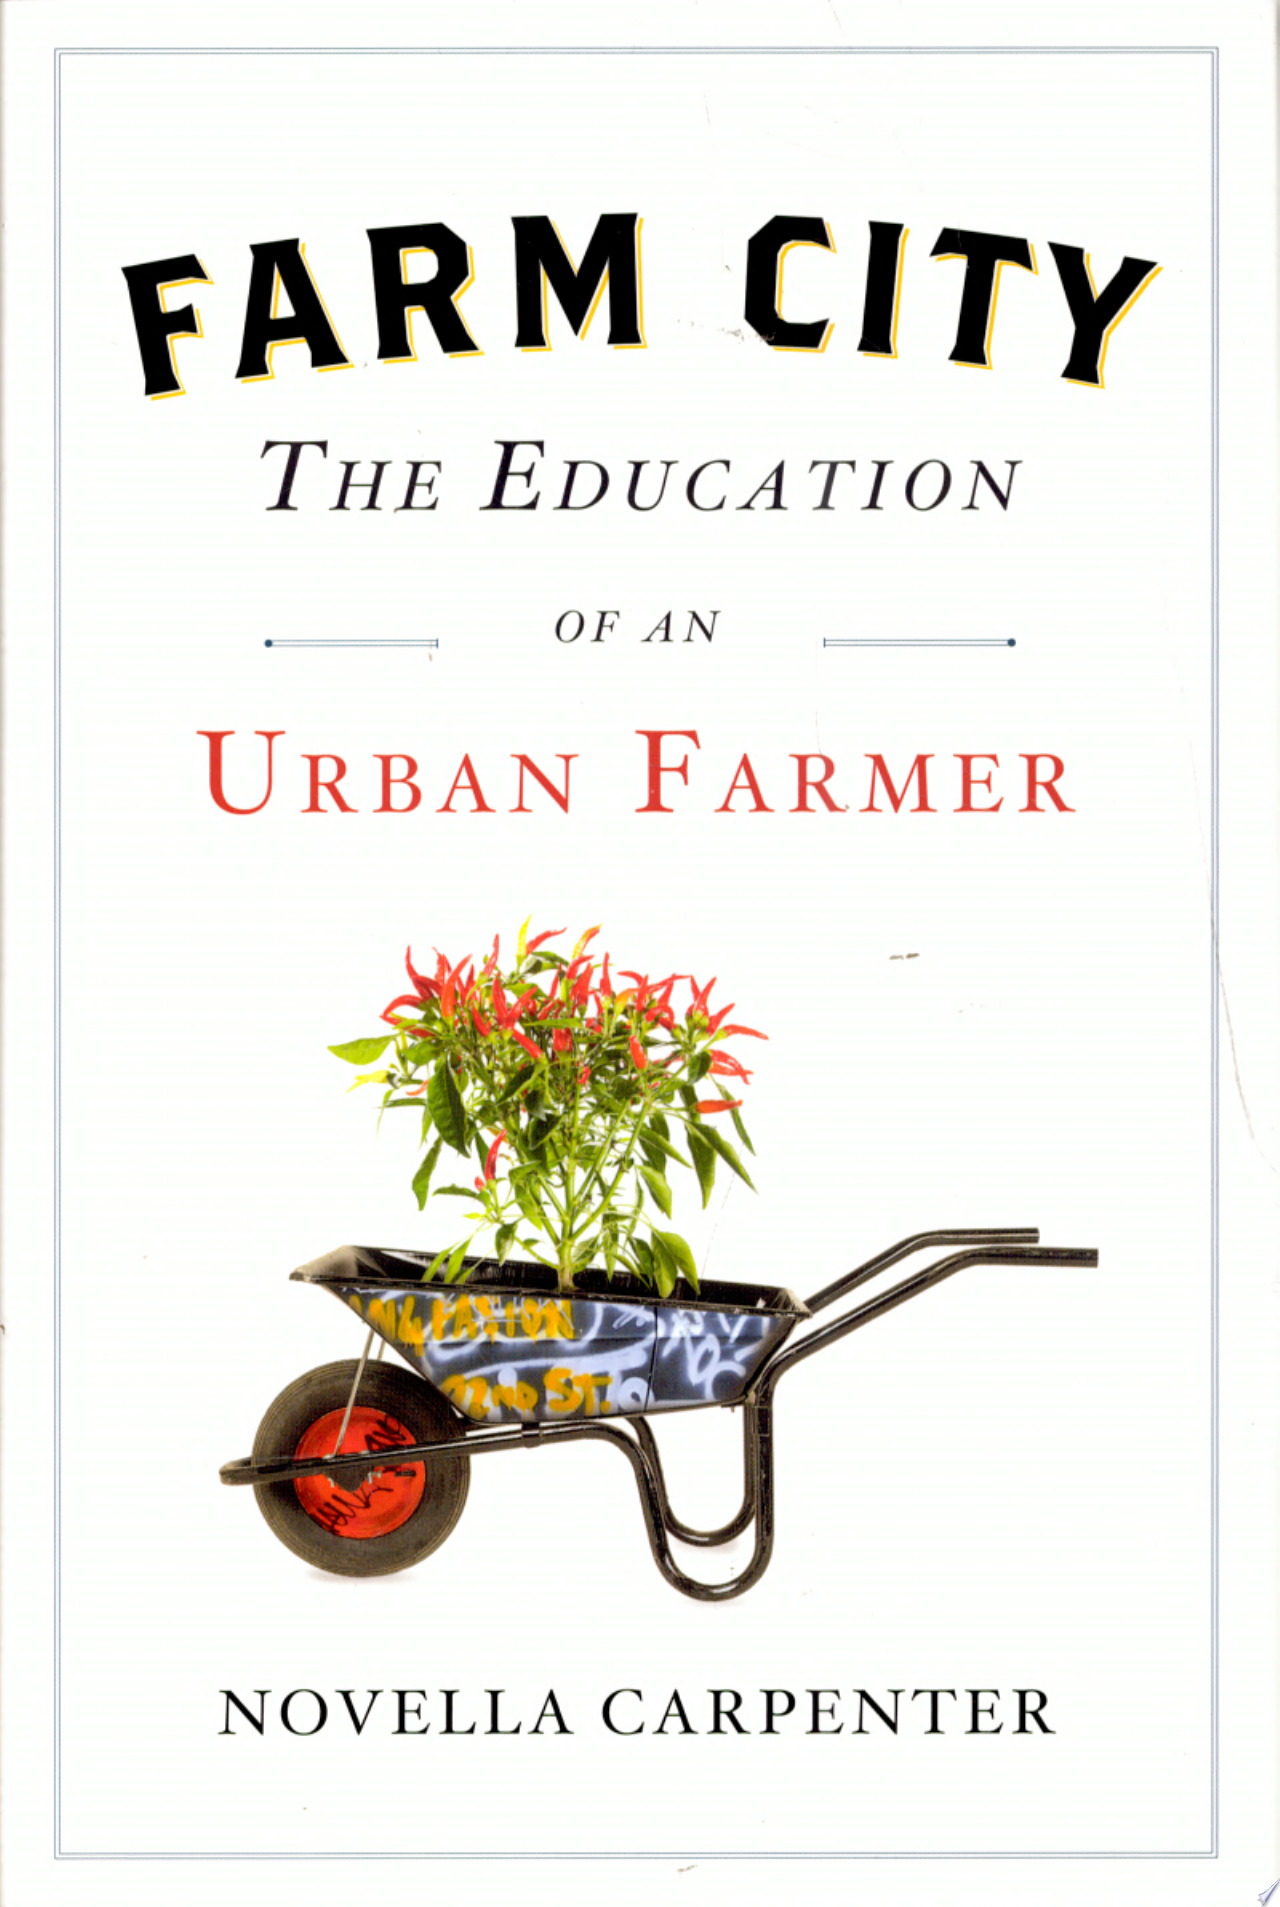 Image for "Farm City"